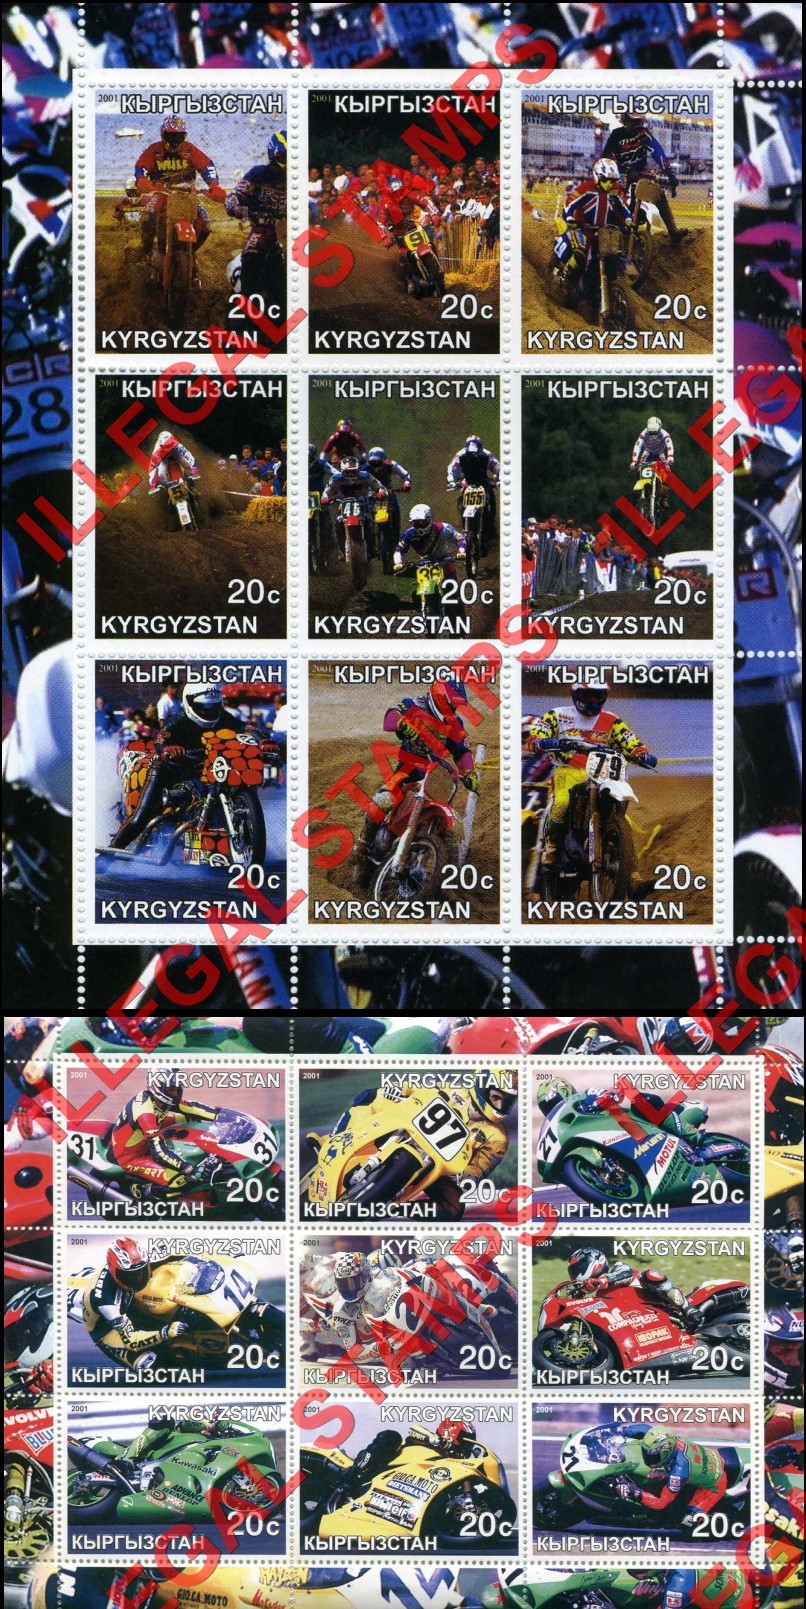 Kyrgyzstan 2001 Motorcycles Racing Illegal Stamp Sheetlets of Nine